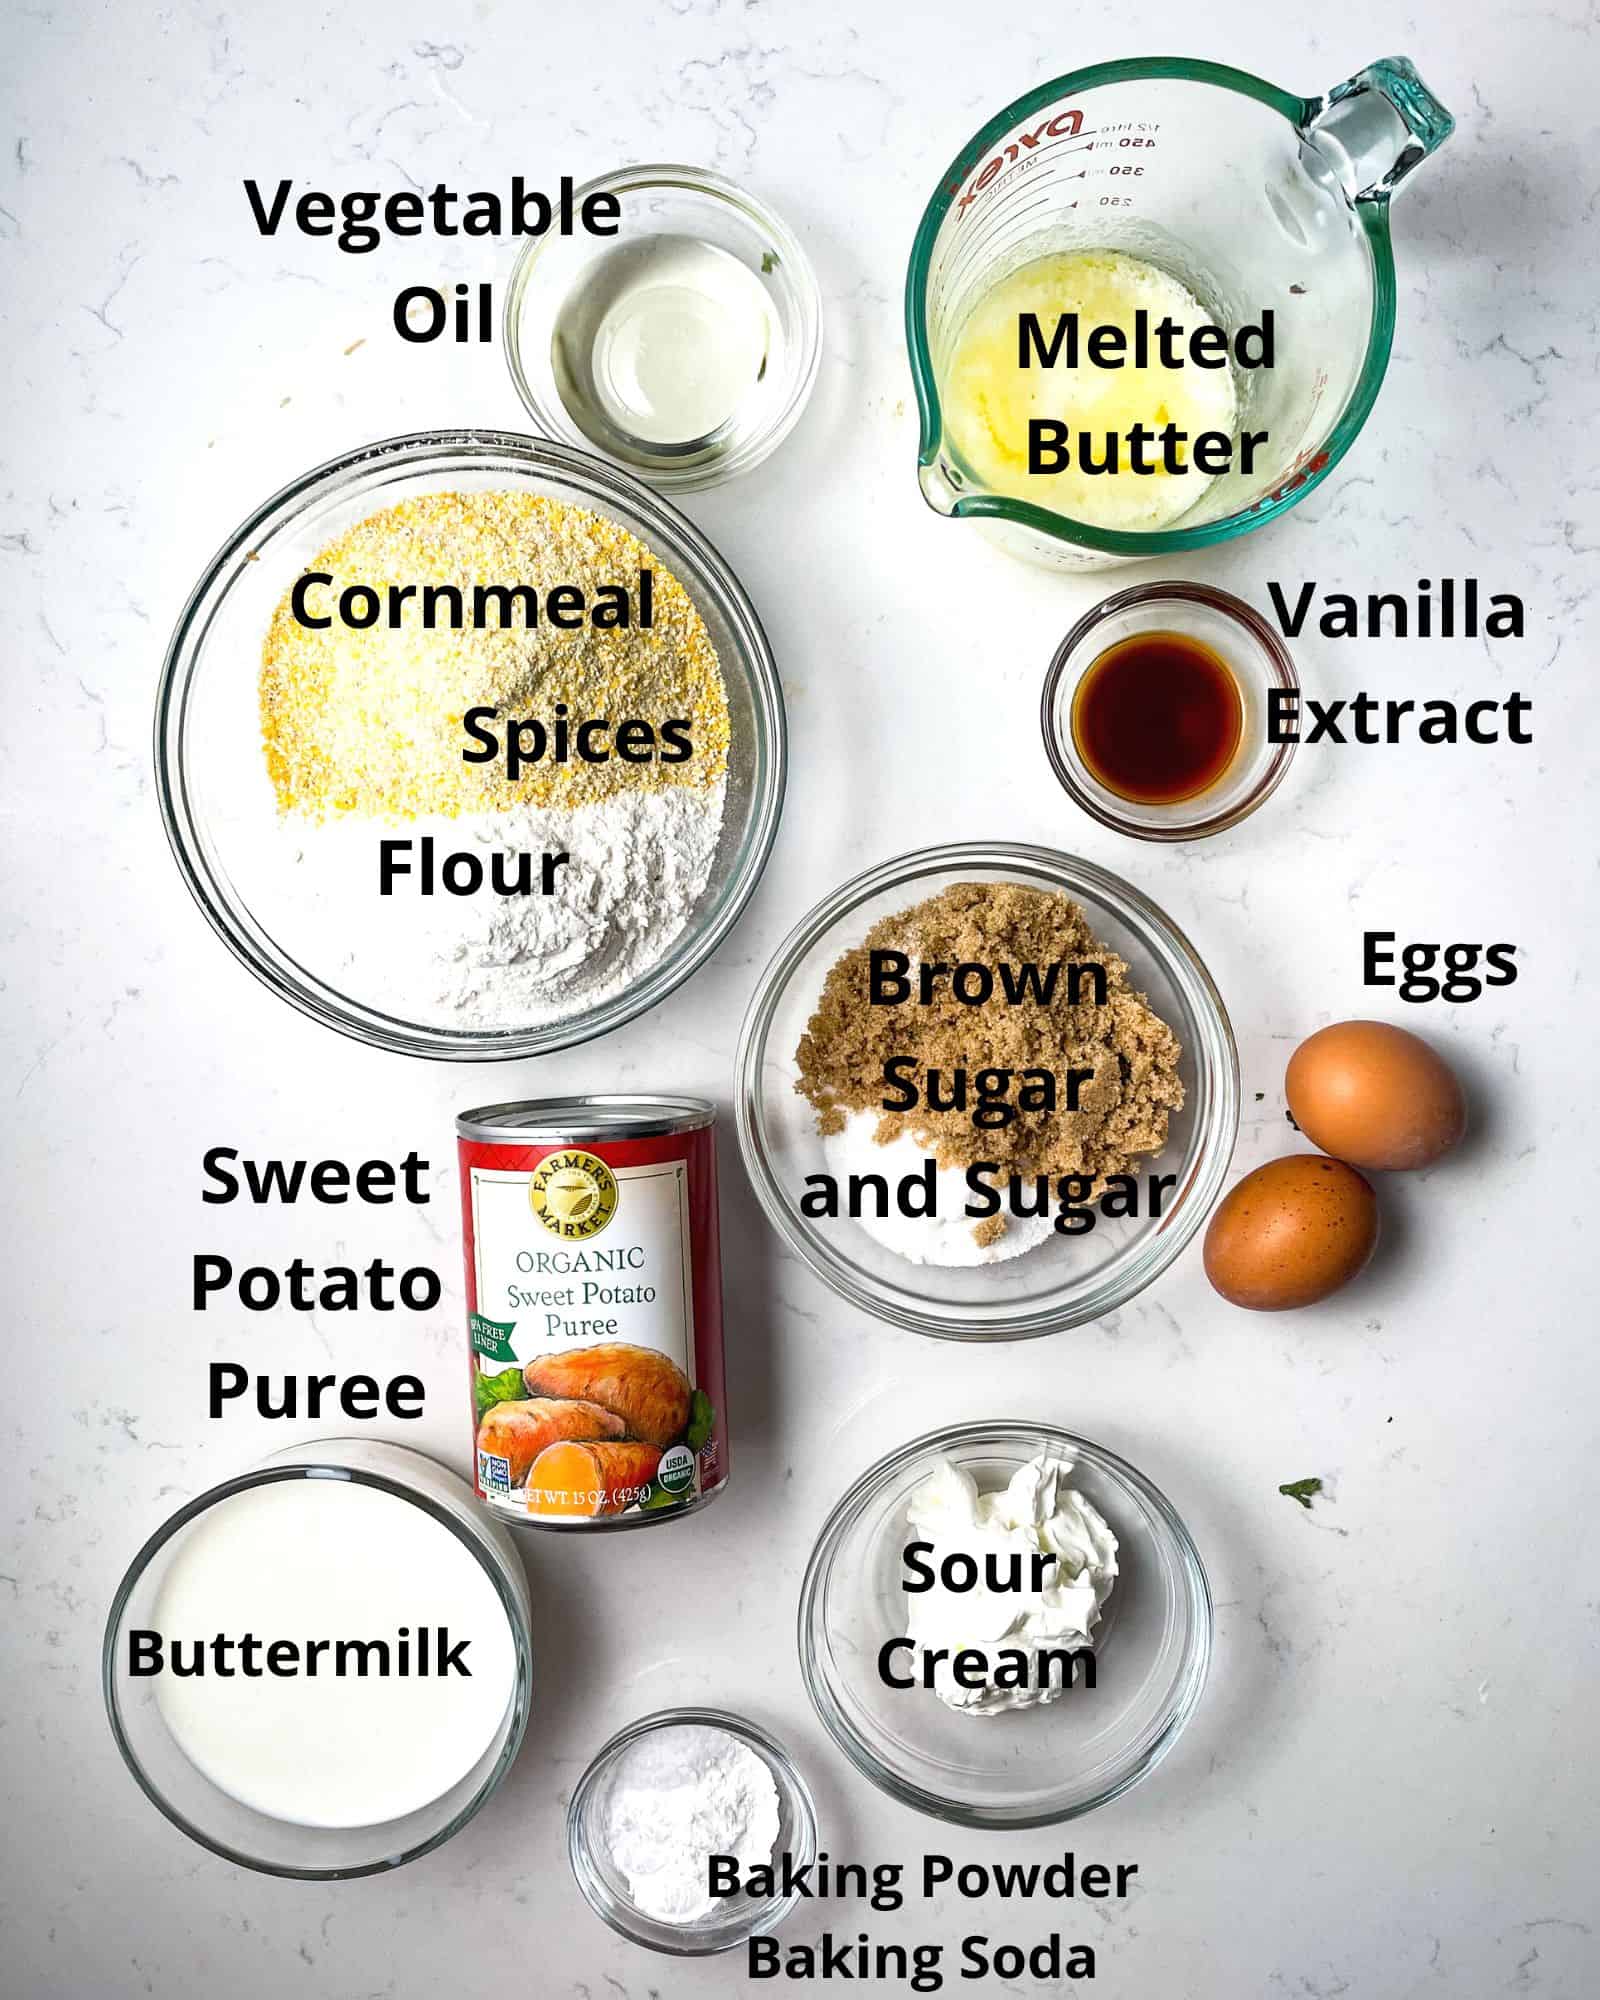 ingredients to make sweet potato cornbread - flour, cornmeal, spices, brown sugar, sugar, baking soda, baking powder, sour cream, buttermilk, butter, vanilla extract, and eggs.